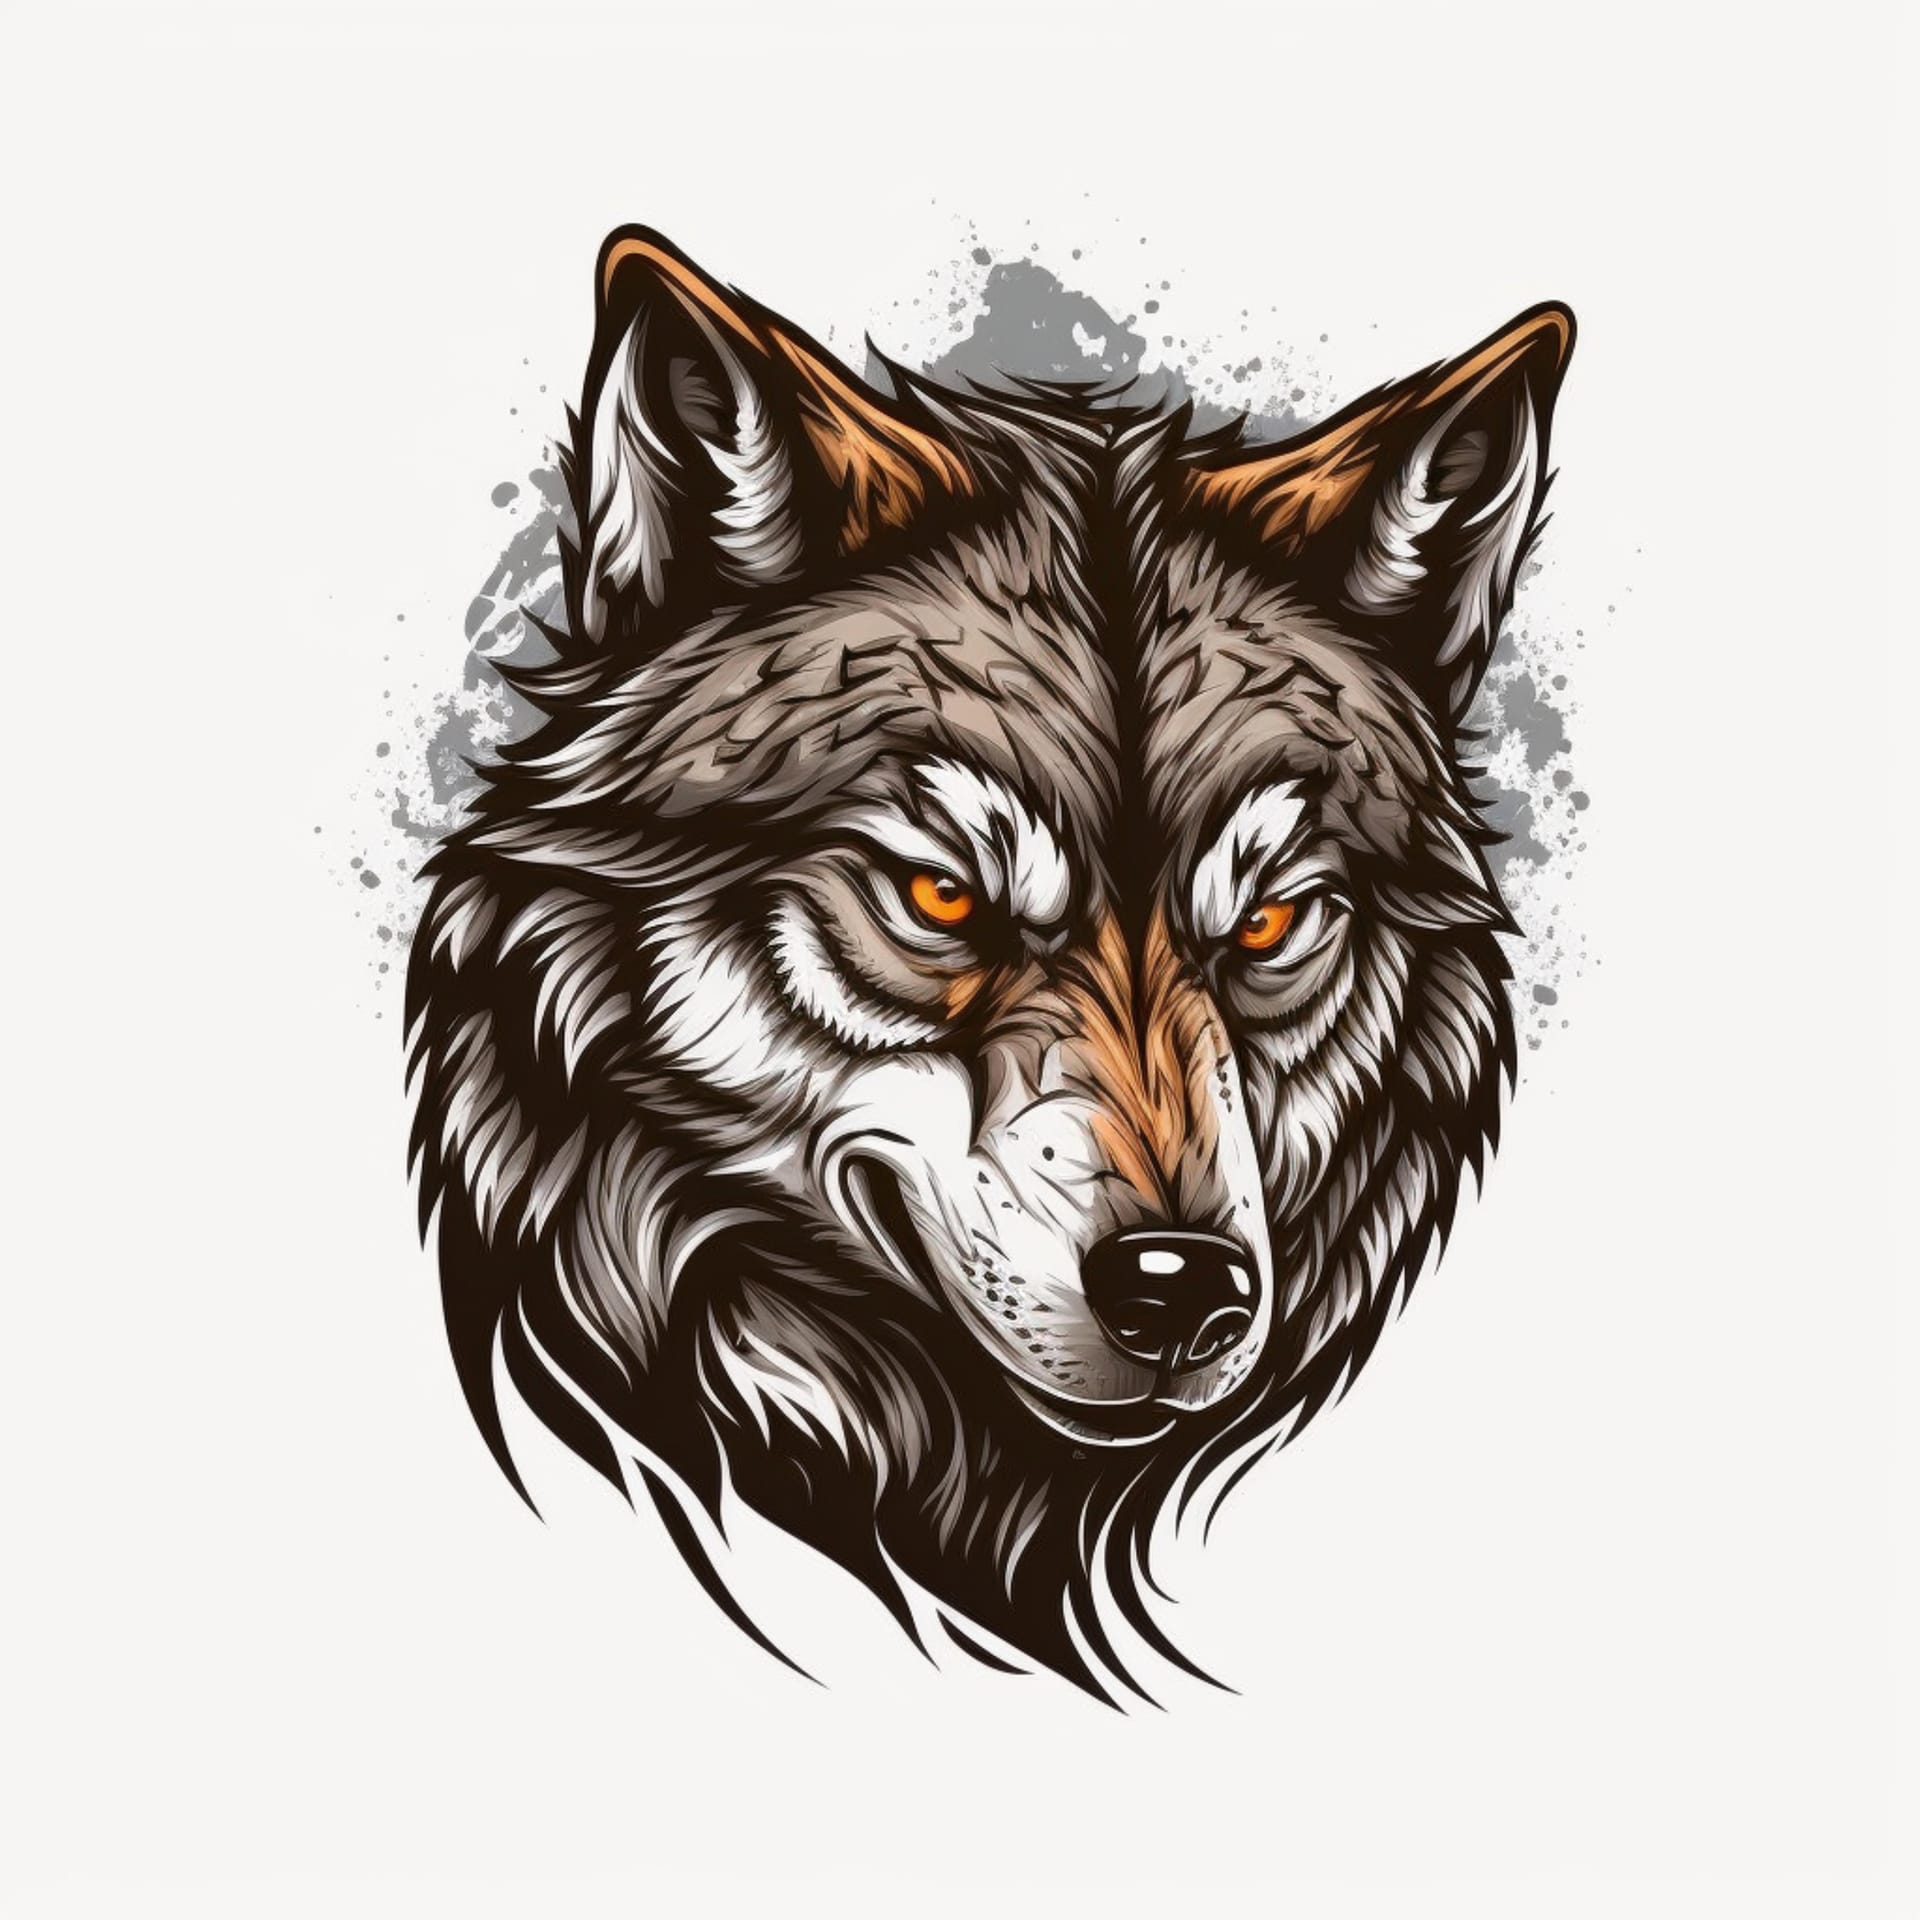 Cool wolf logo illustration expressive image